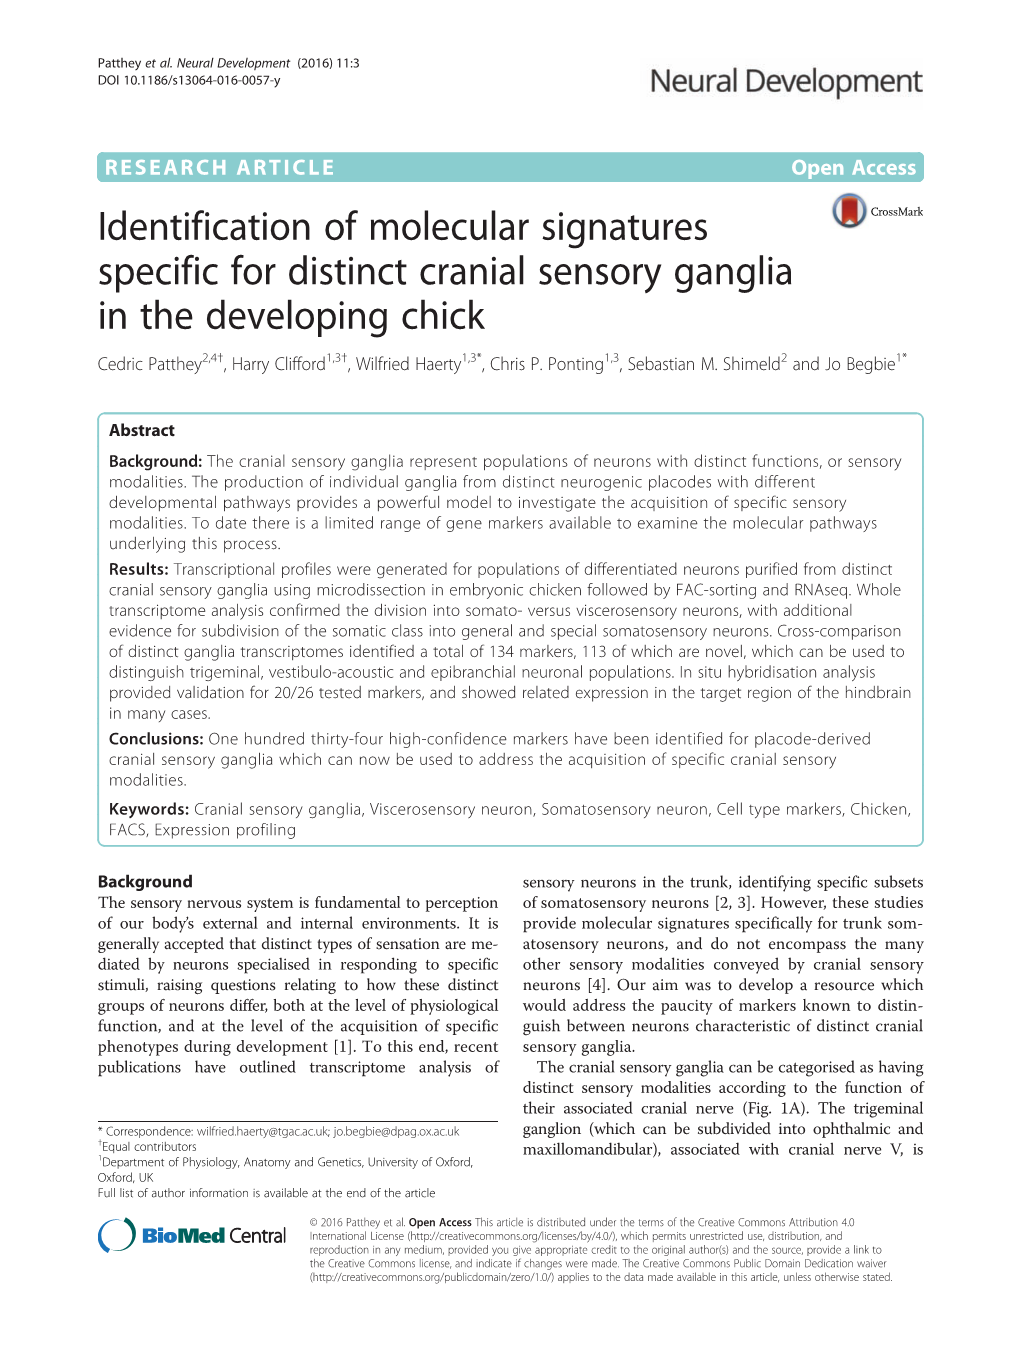 Identification of Molecular Signatures Specific for Distinct Cranial Sensory